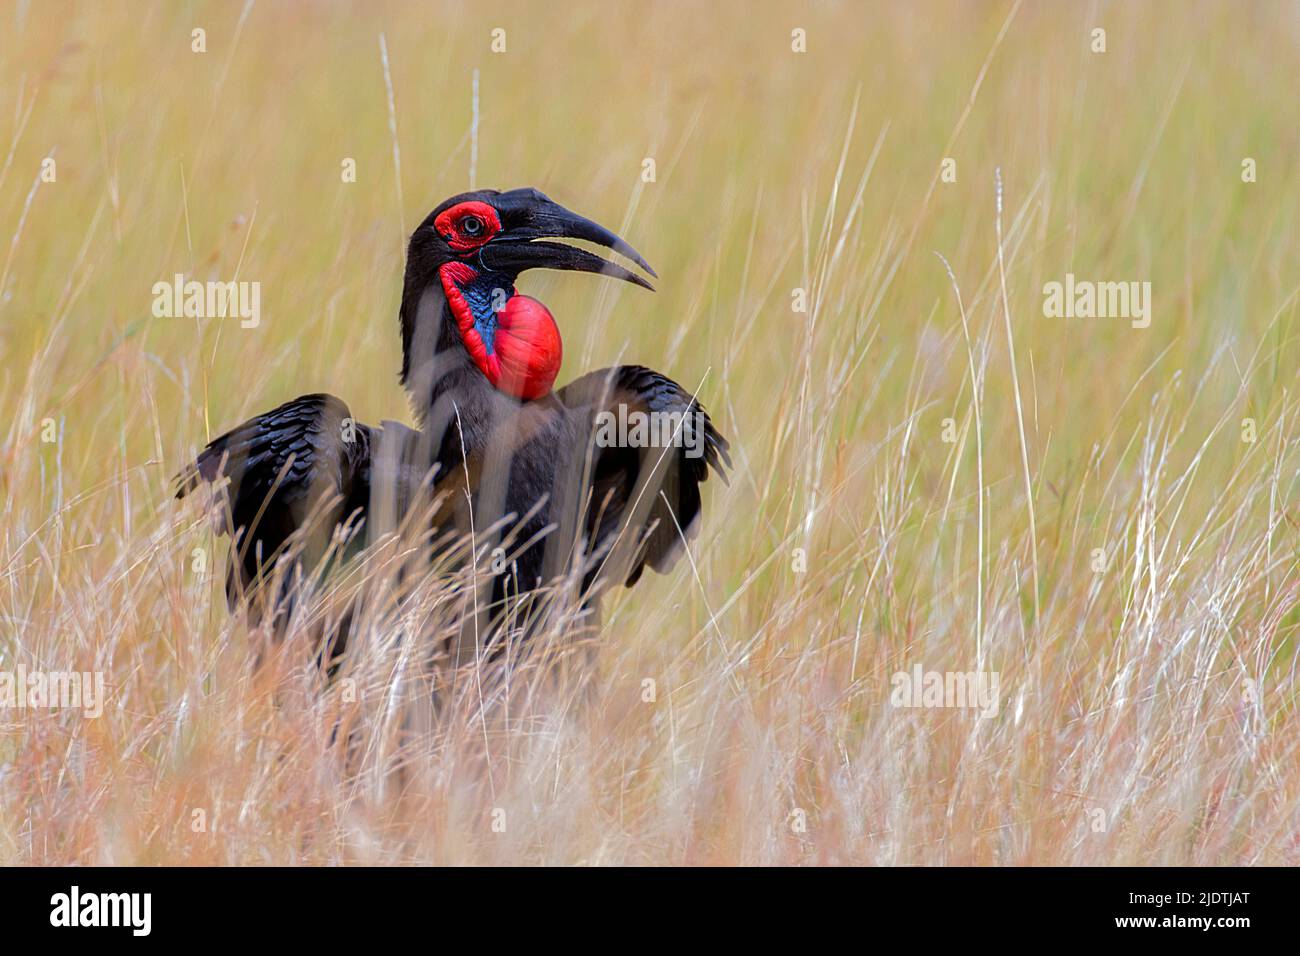 Nördlicher Hornvogel (Bucorvus abyssinicus) aus Maasai Mara, Kenia. Stockfoto